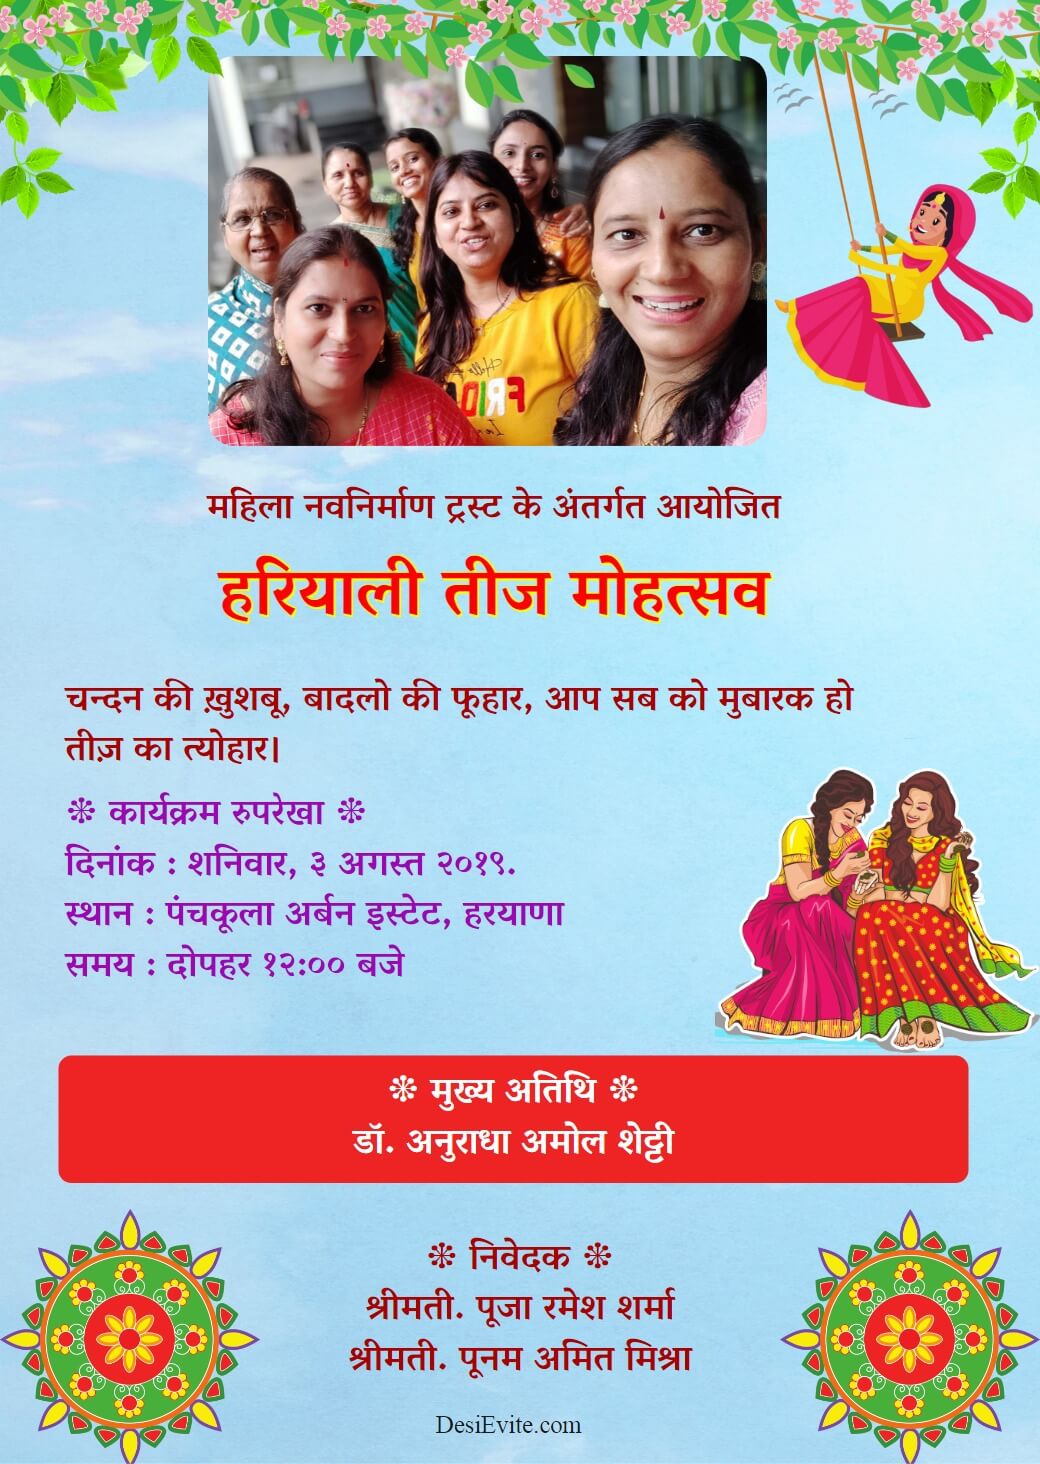 Teej festival invitation in hindi with photo upload